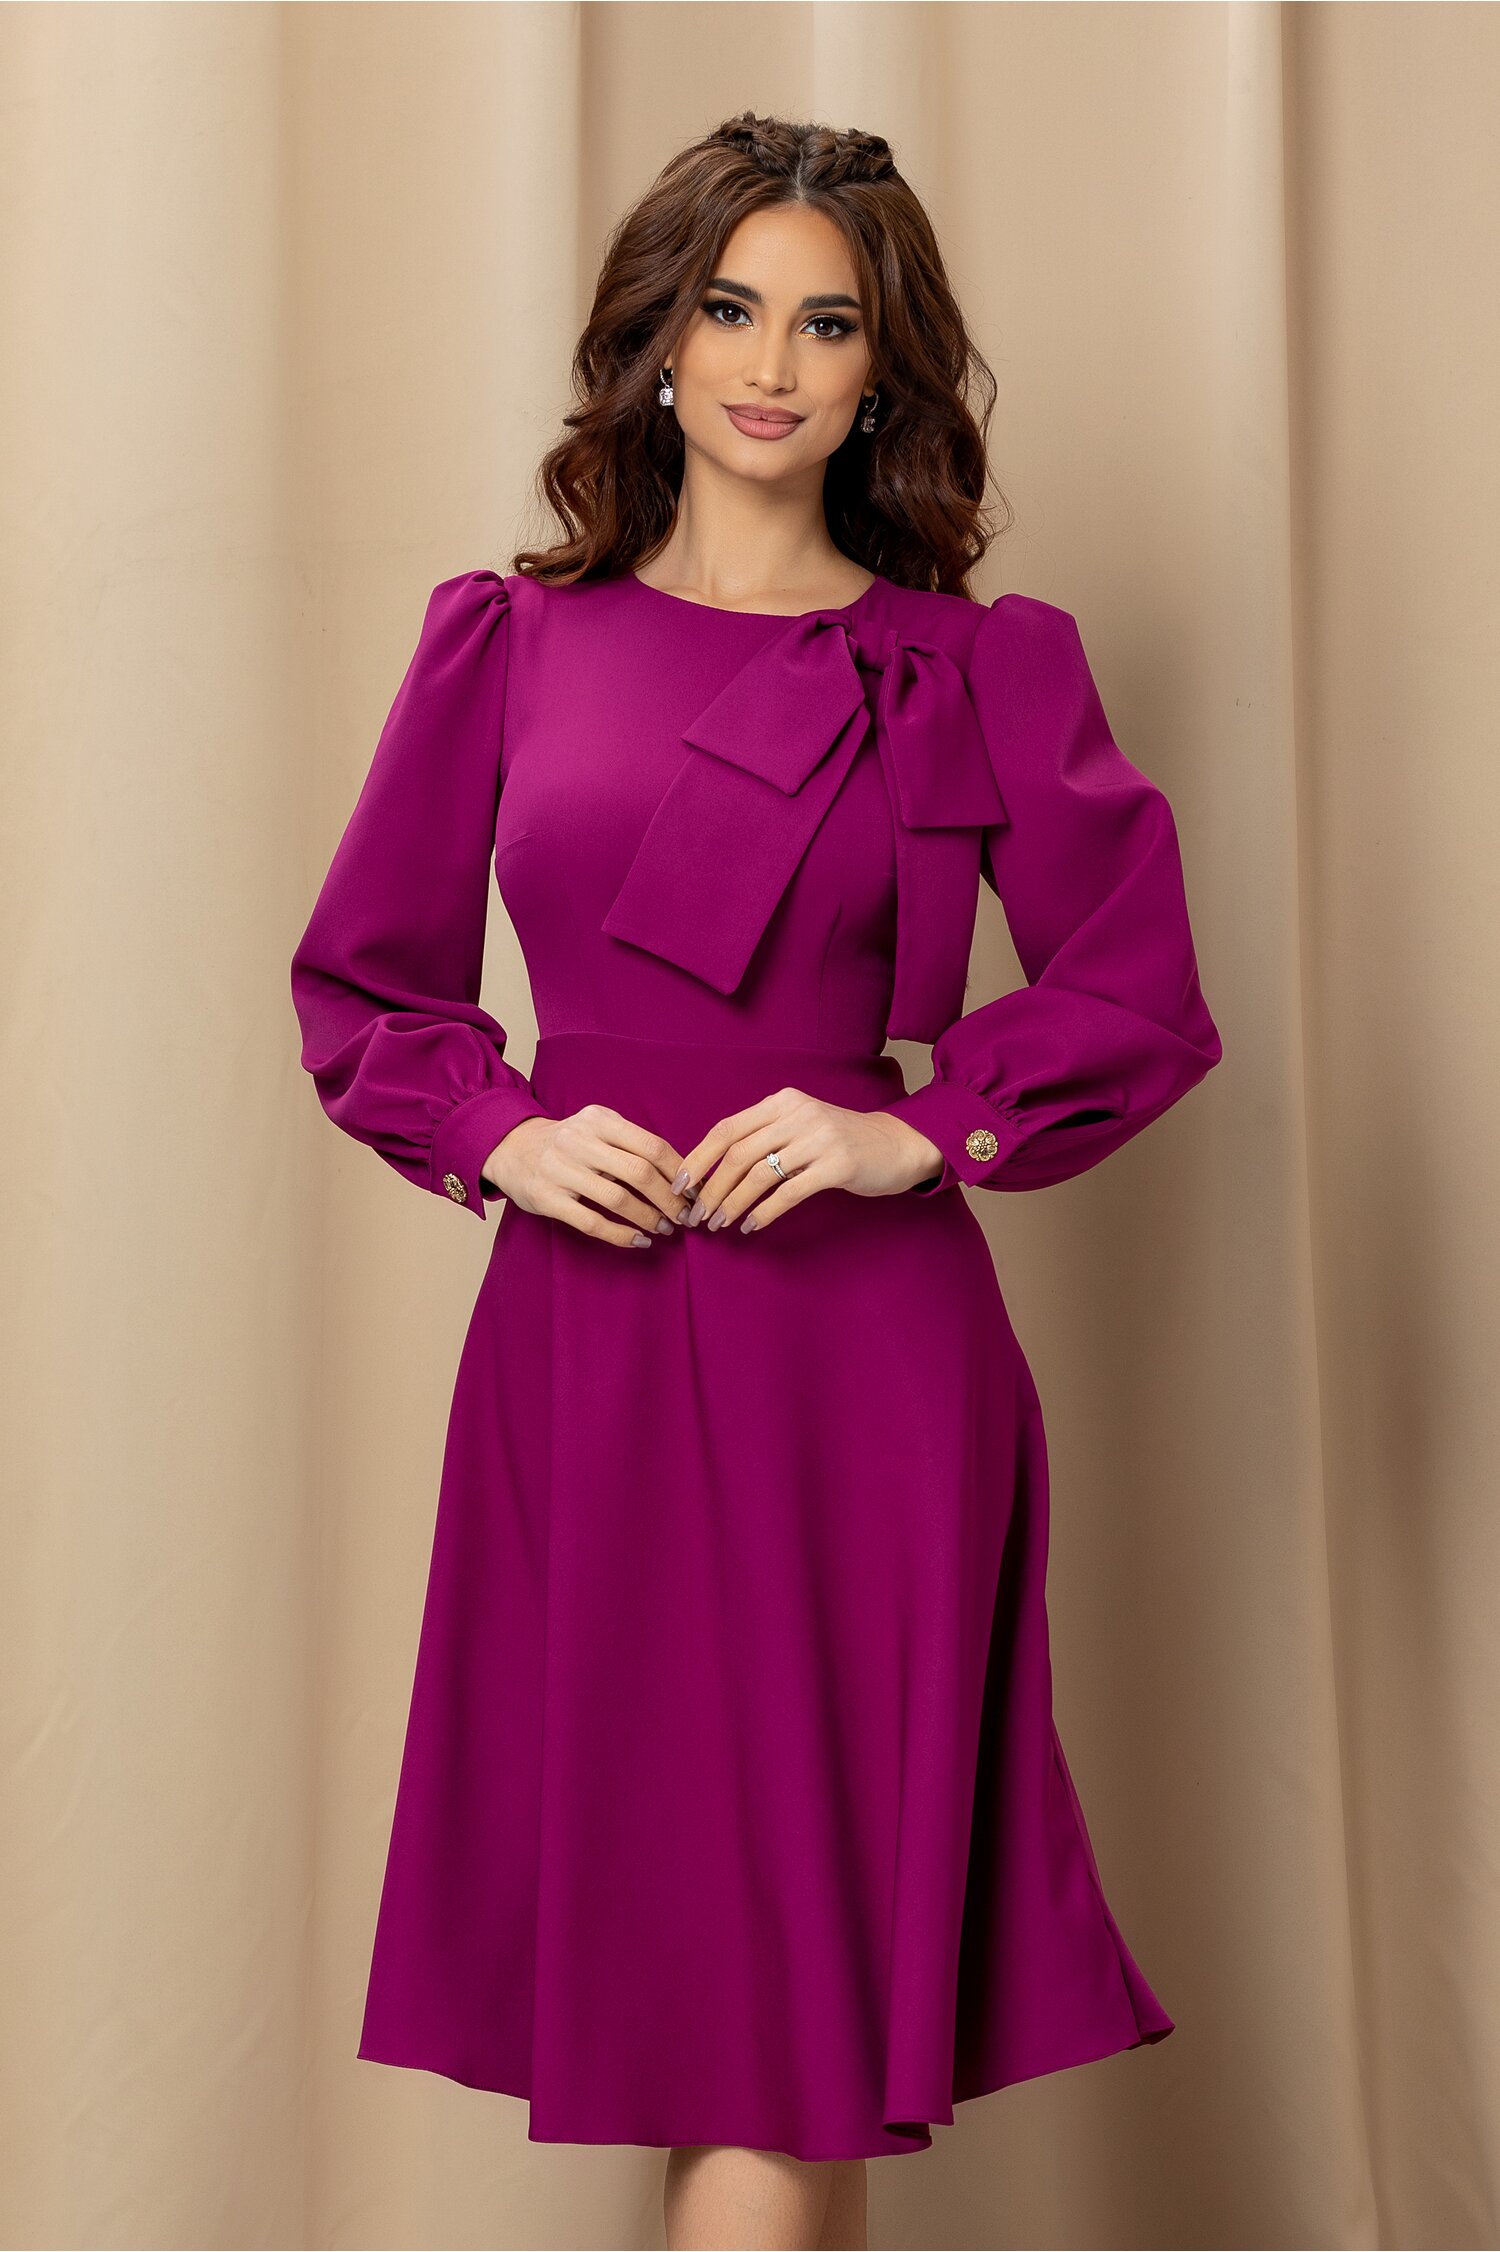 Rochie Dy Fashion violet cu fundita la bust dyfashion.ro imagine megaplaza.ro